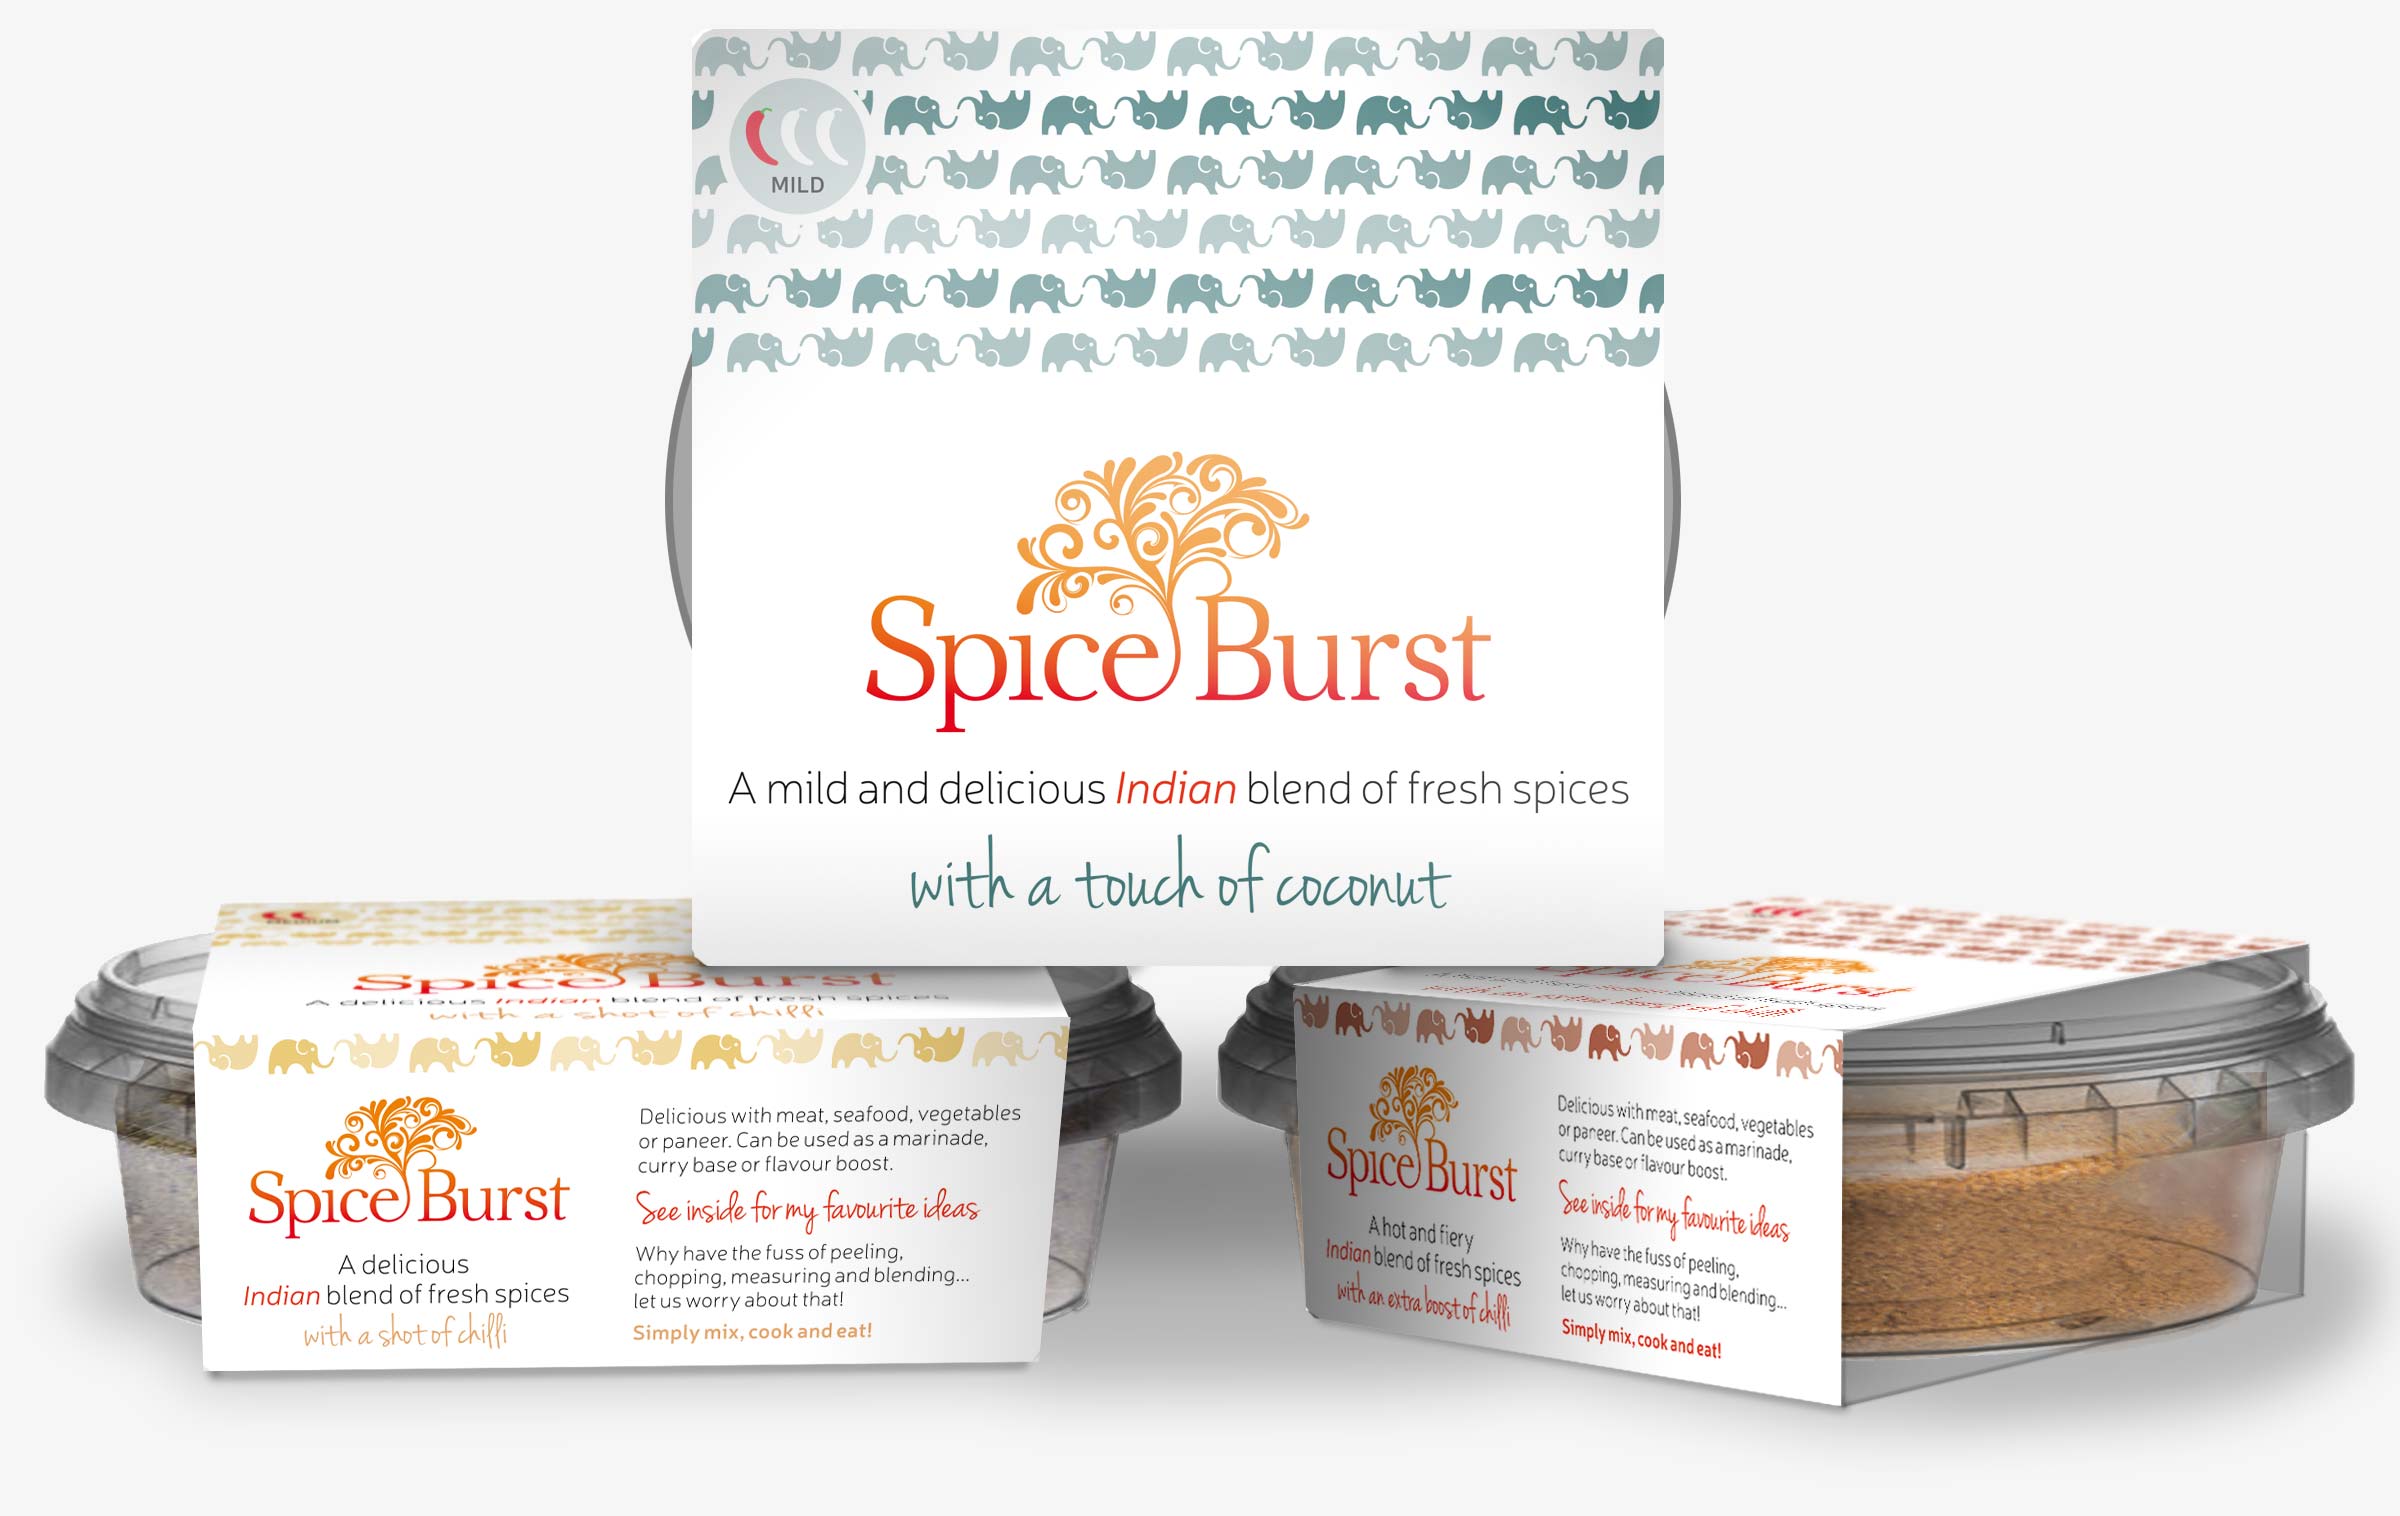 Spice Burst range